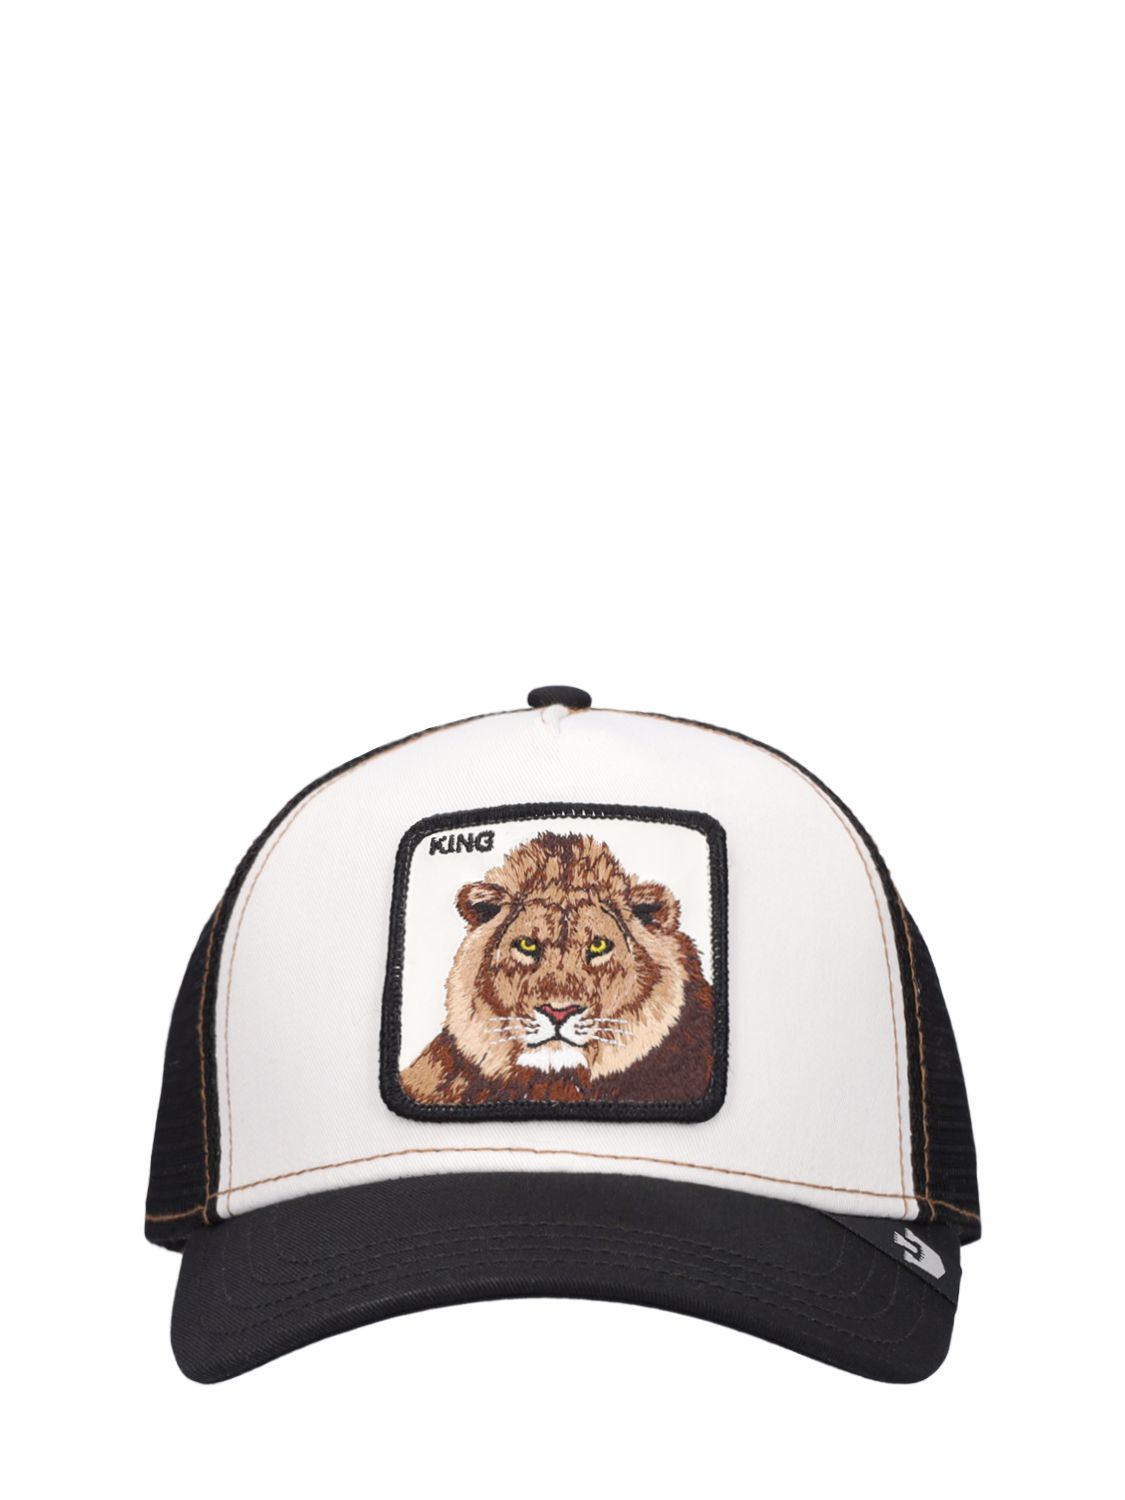 The Lion King Trucker Hat W/ Patch